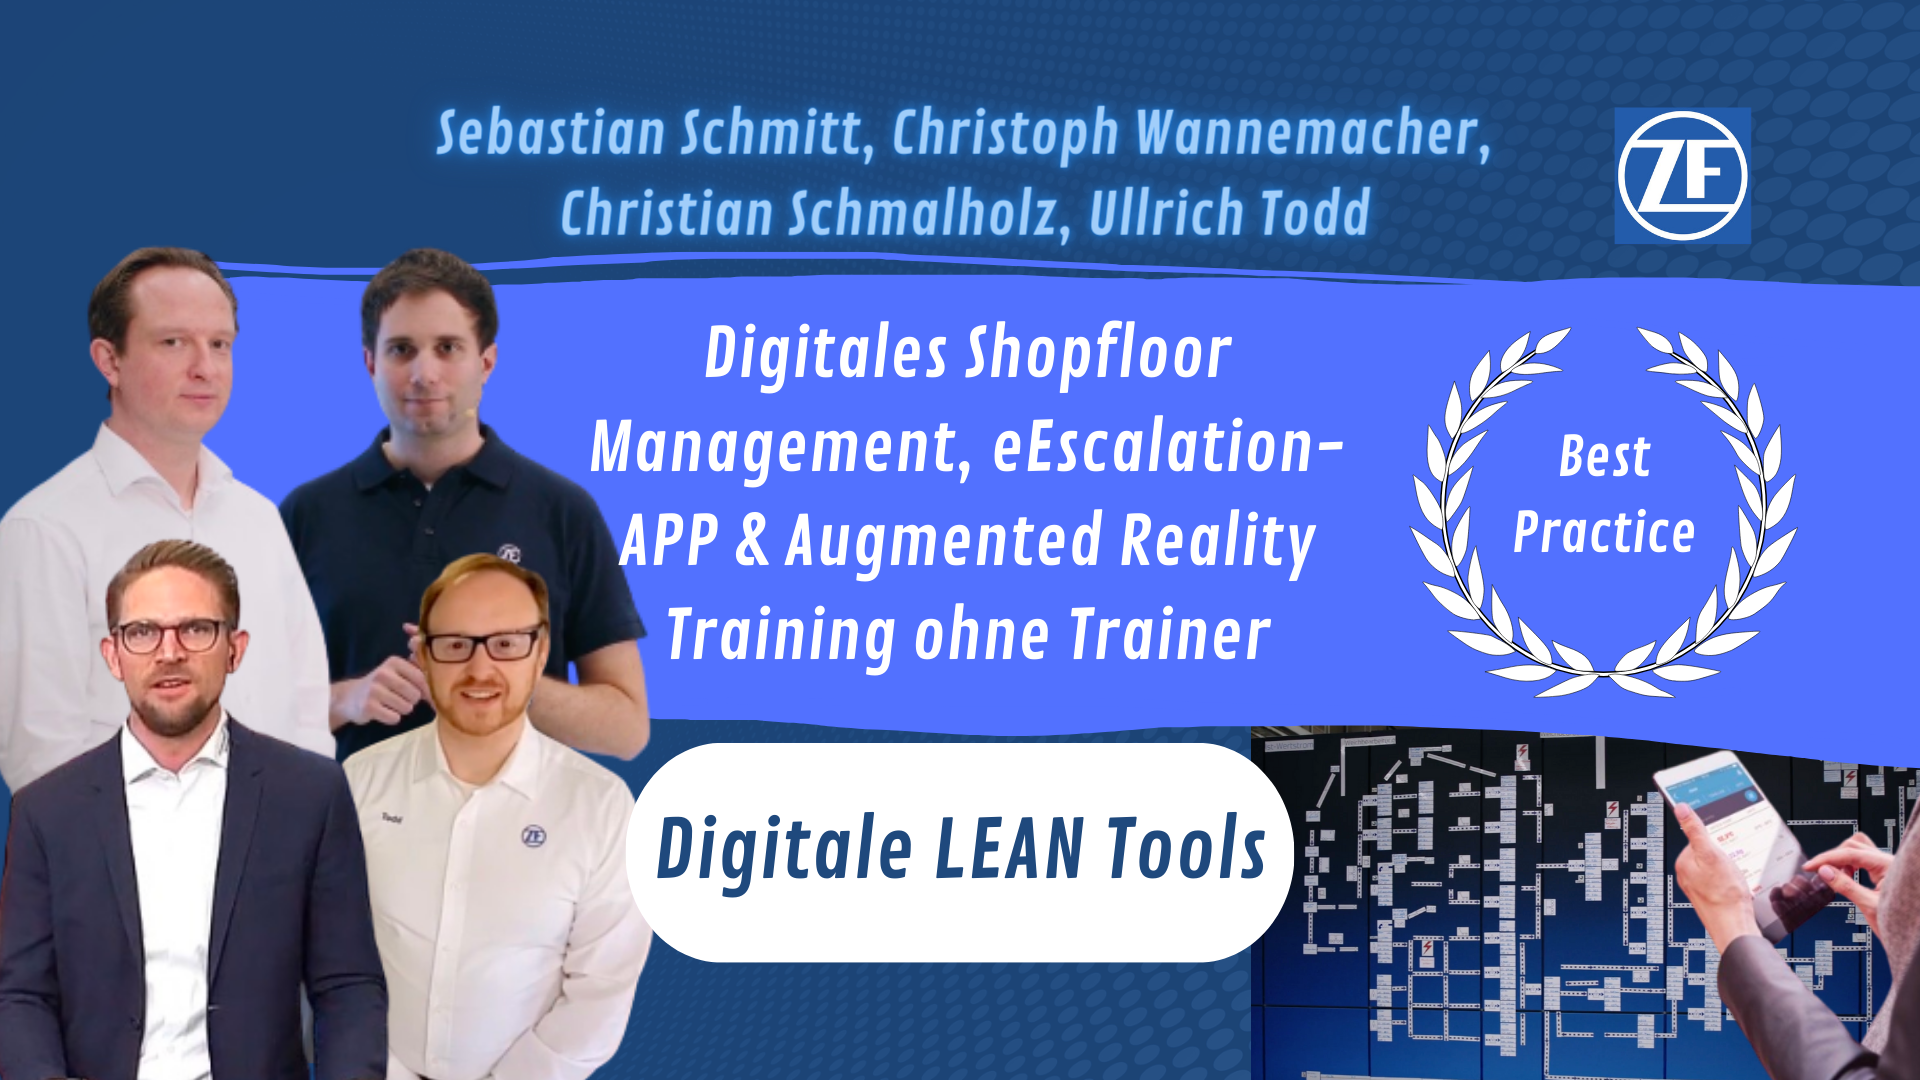 LEAN - Digitale LEAN Tools mit Sebastian Schmitt, Christoph Wannemacher, Christian Schmalholz, Ullrich Todd